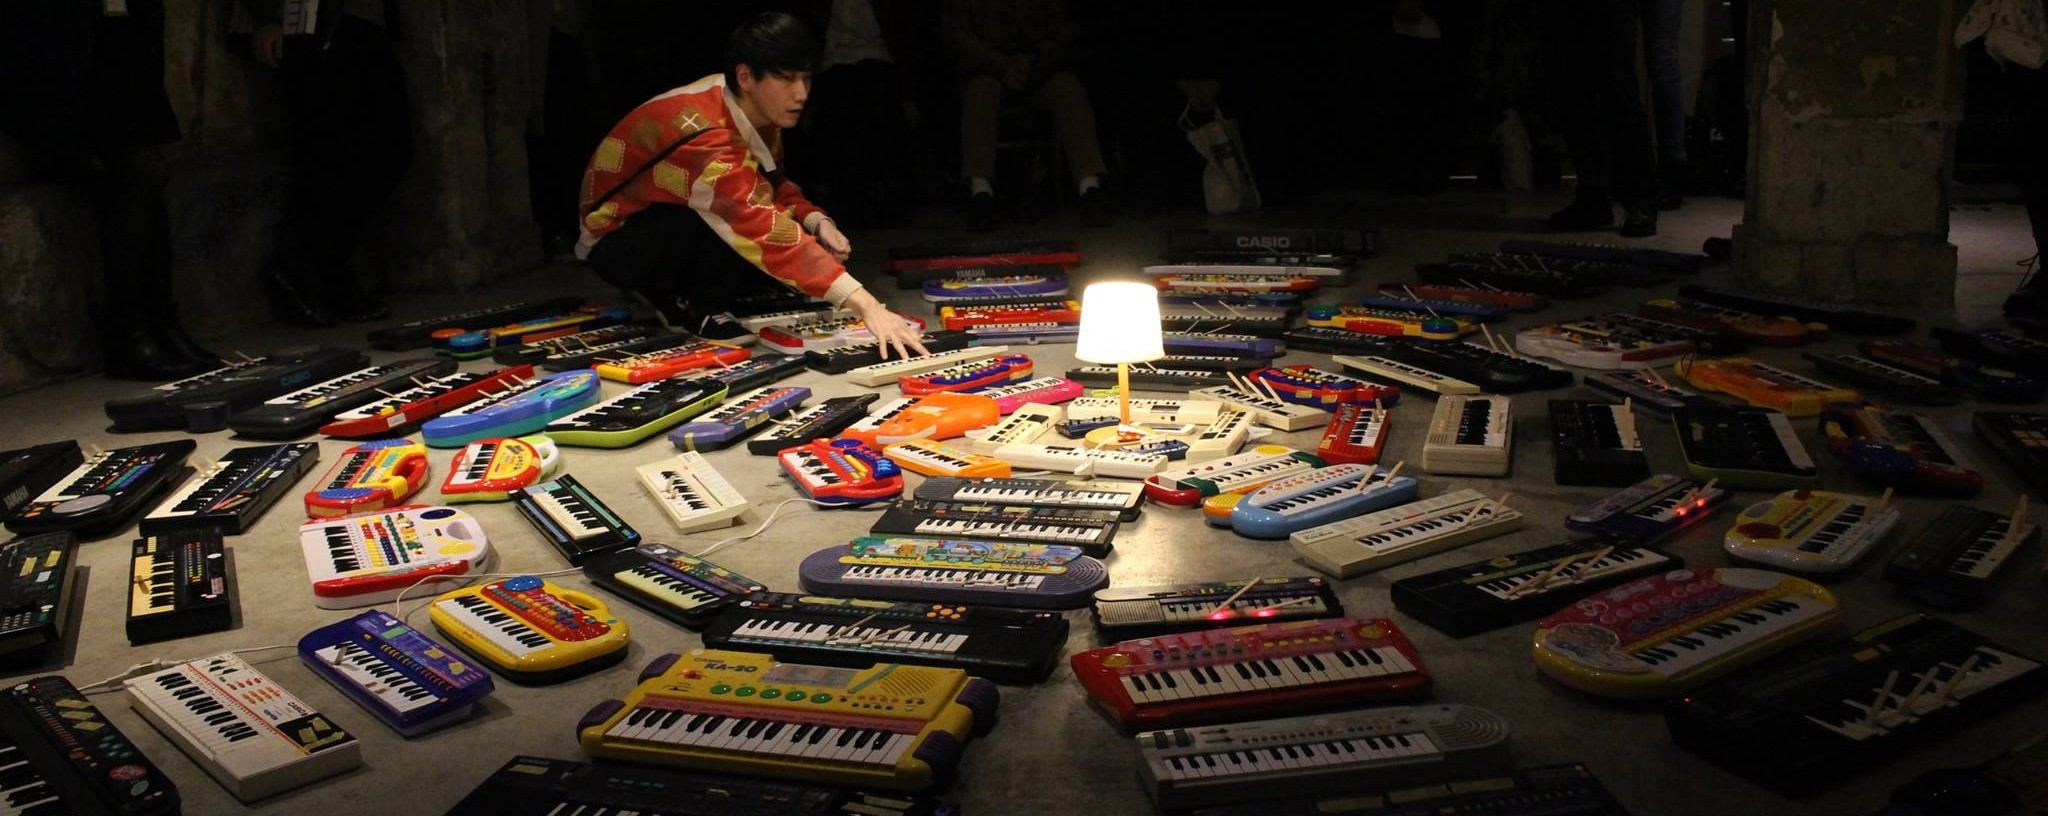 100 Keyboards By ASUNA